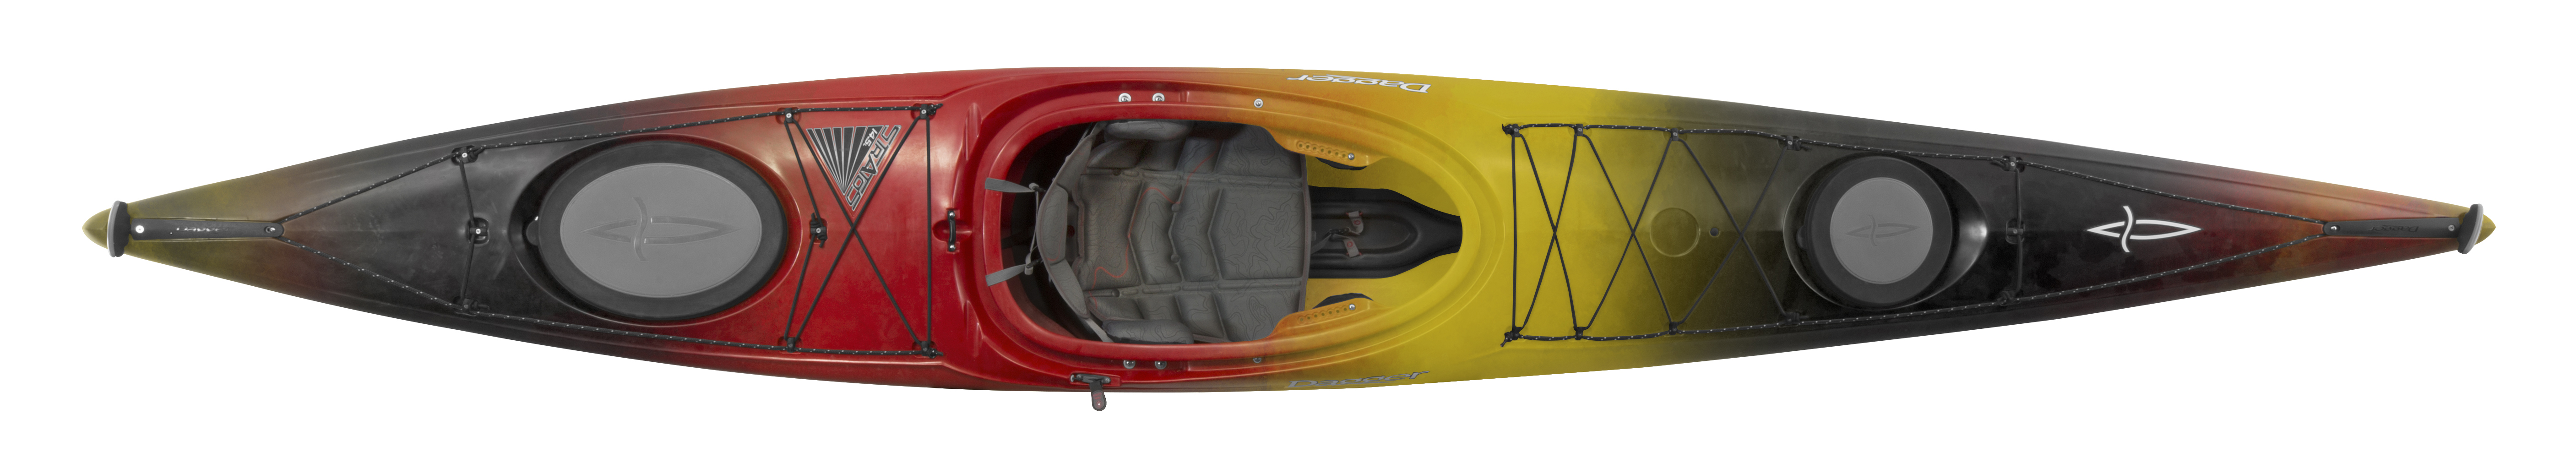 Kayaks: STRATOS 14.5 L by Dagger - Image 4473